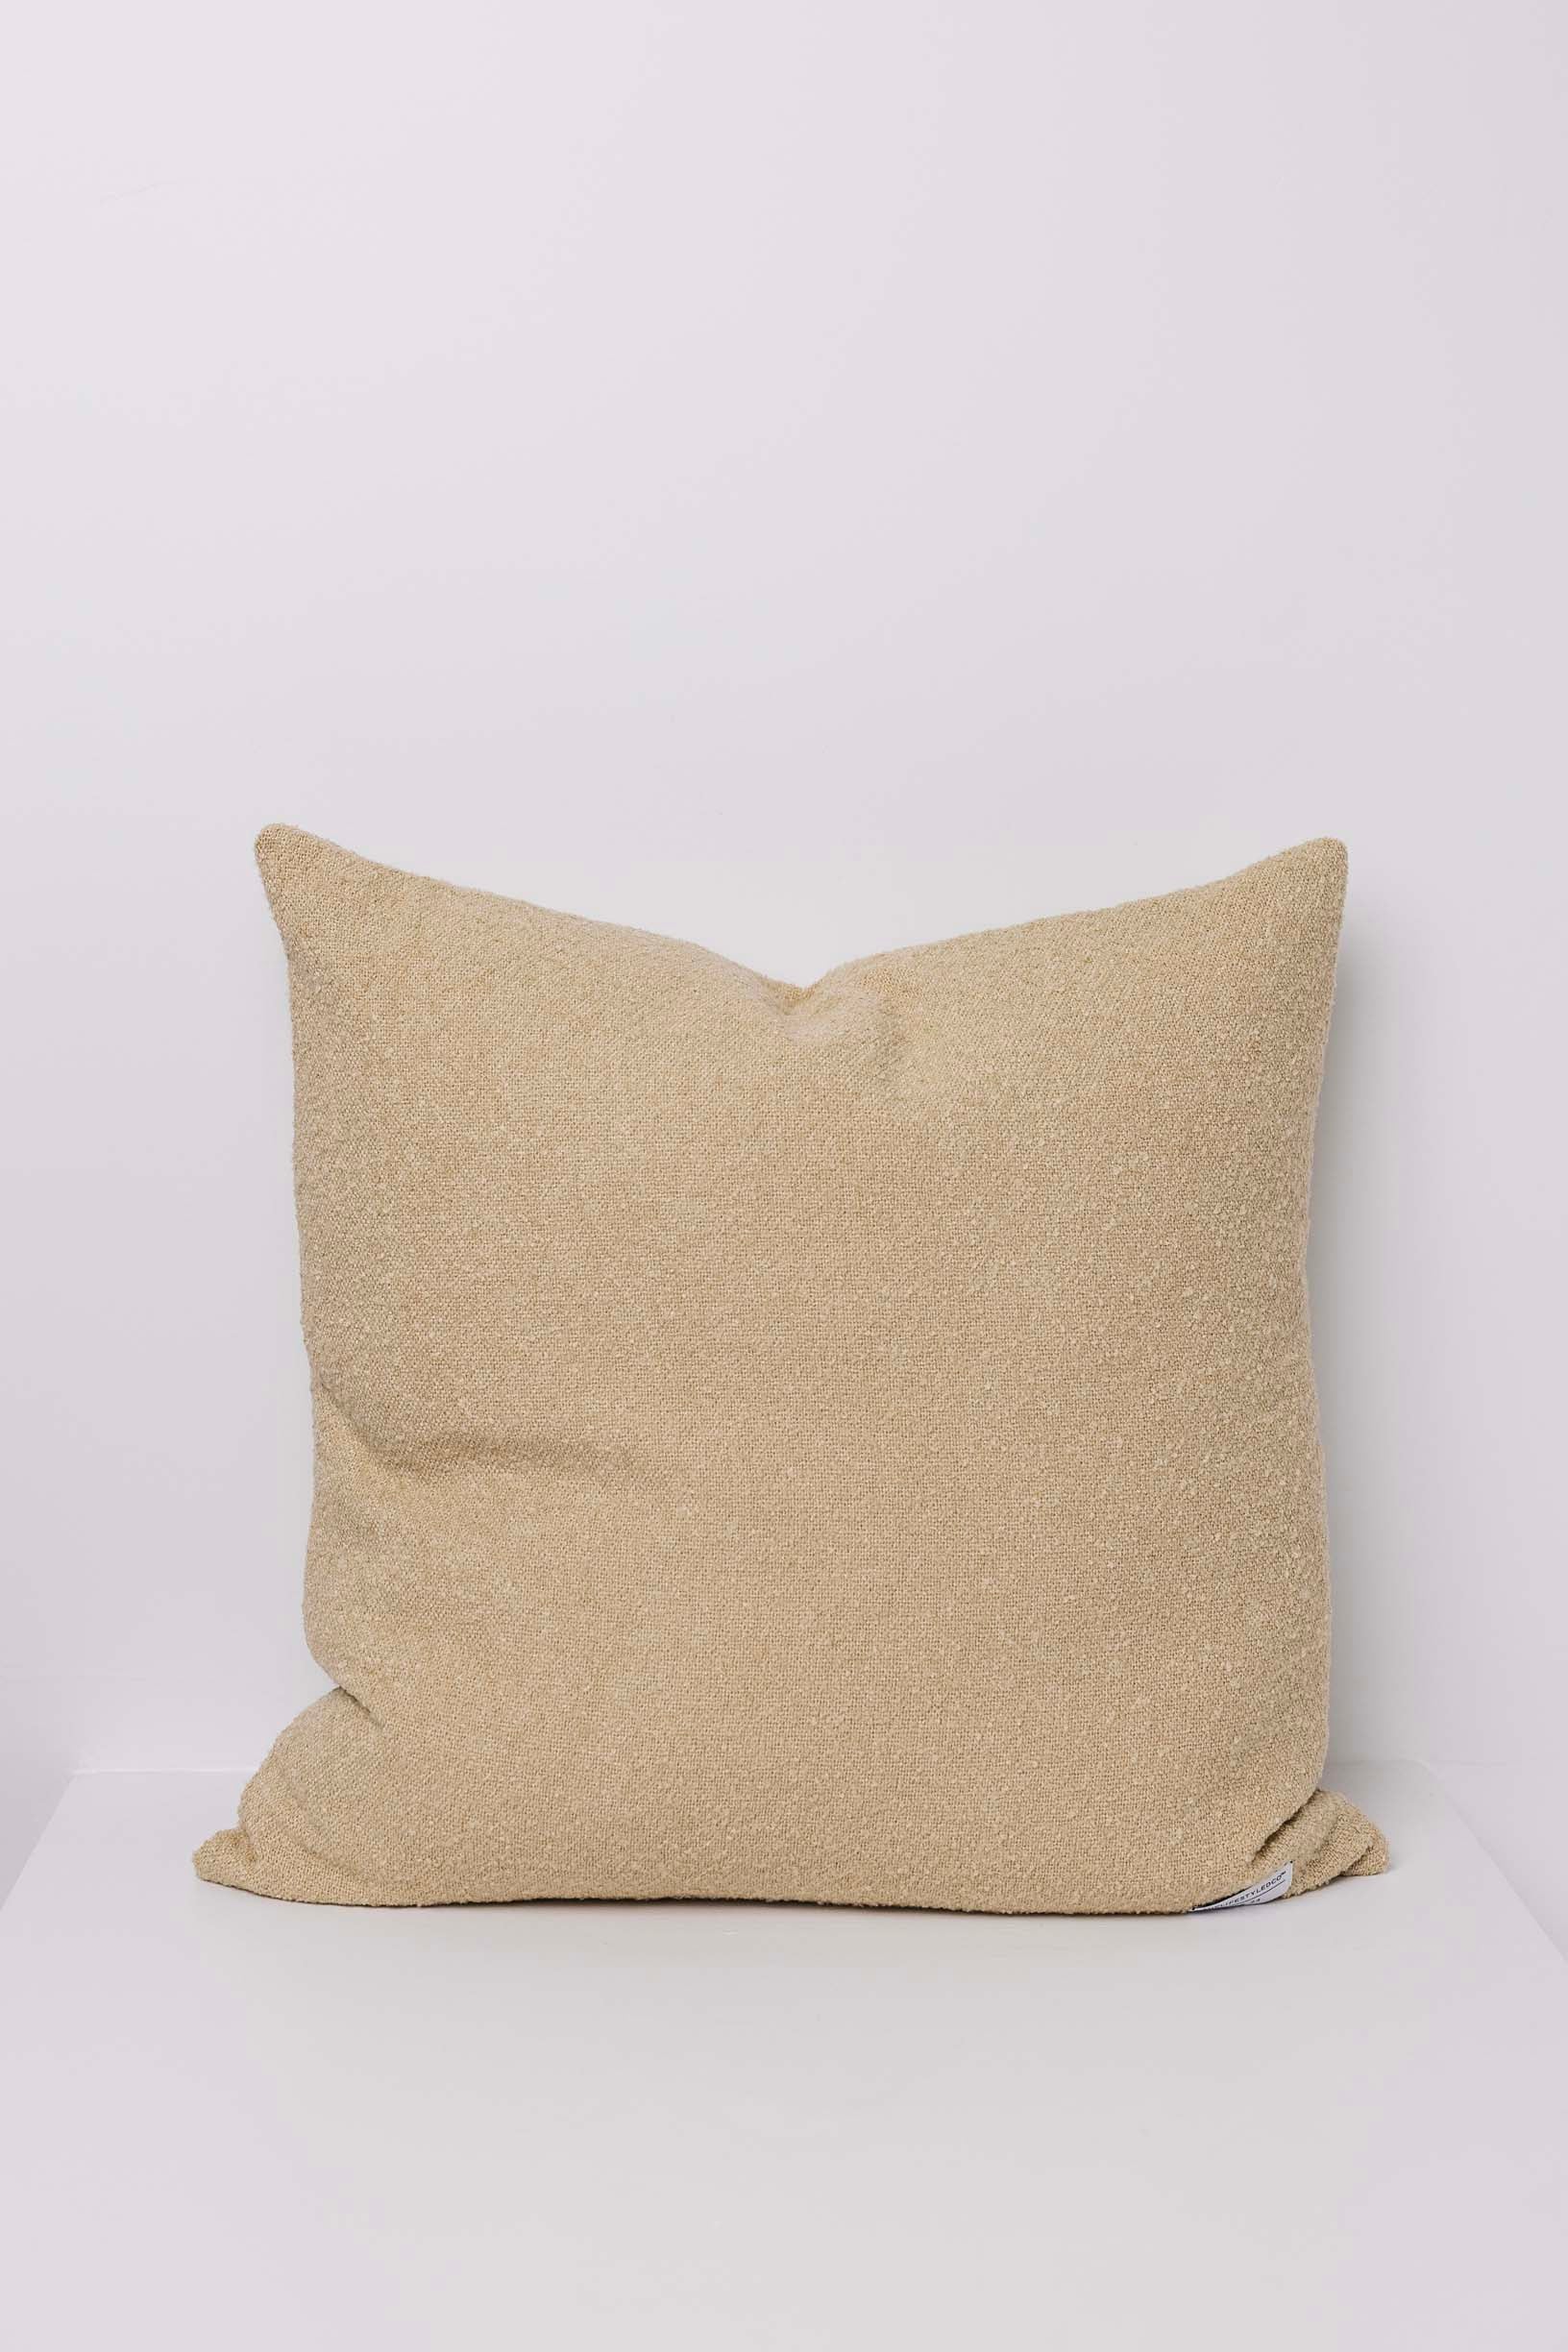 Barnes Boucle Pillow - Creamy Beige